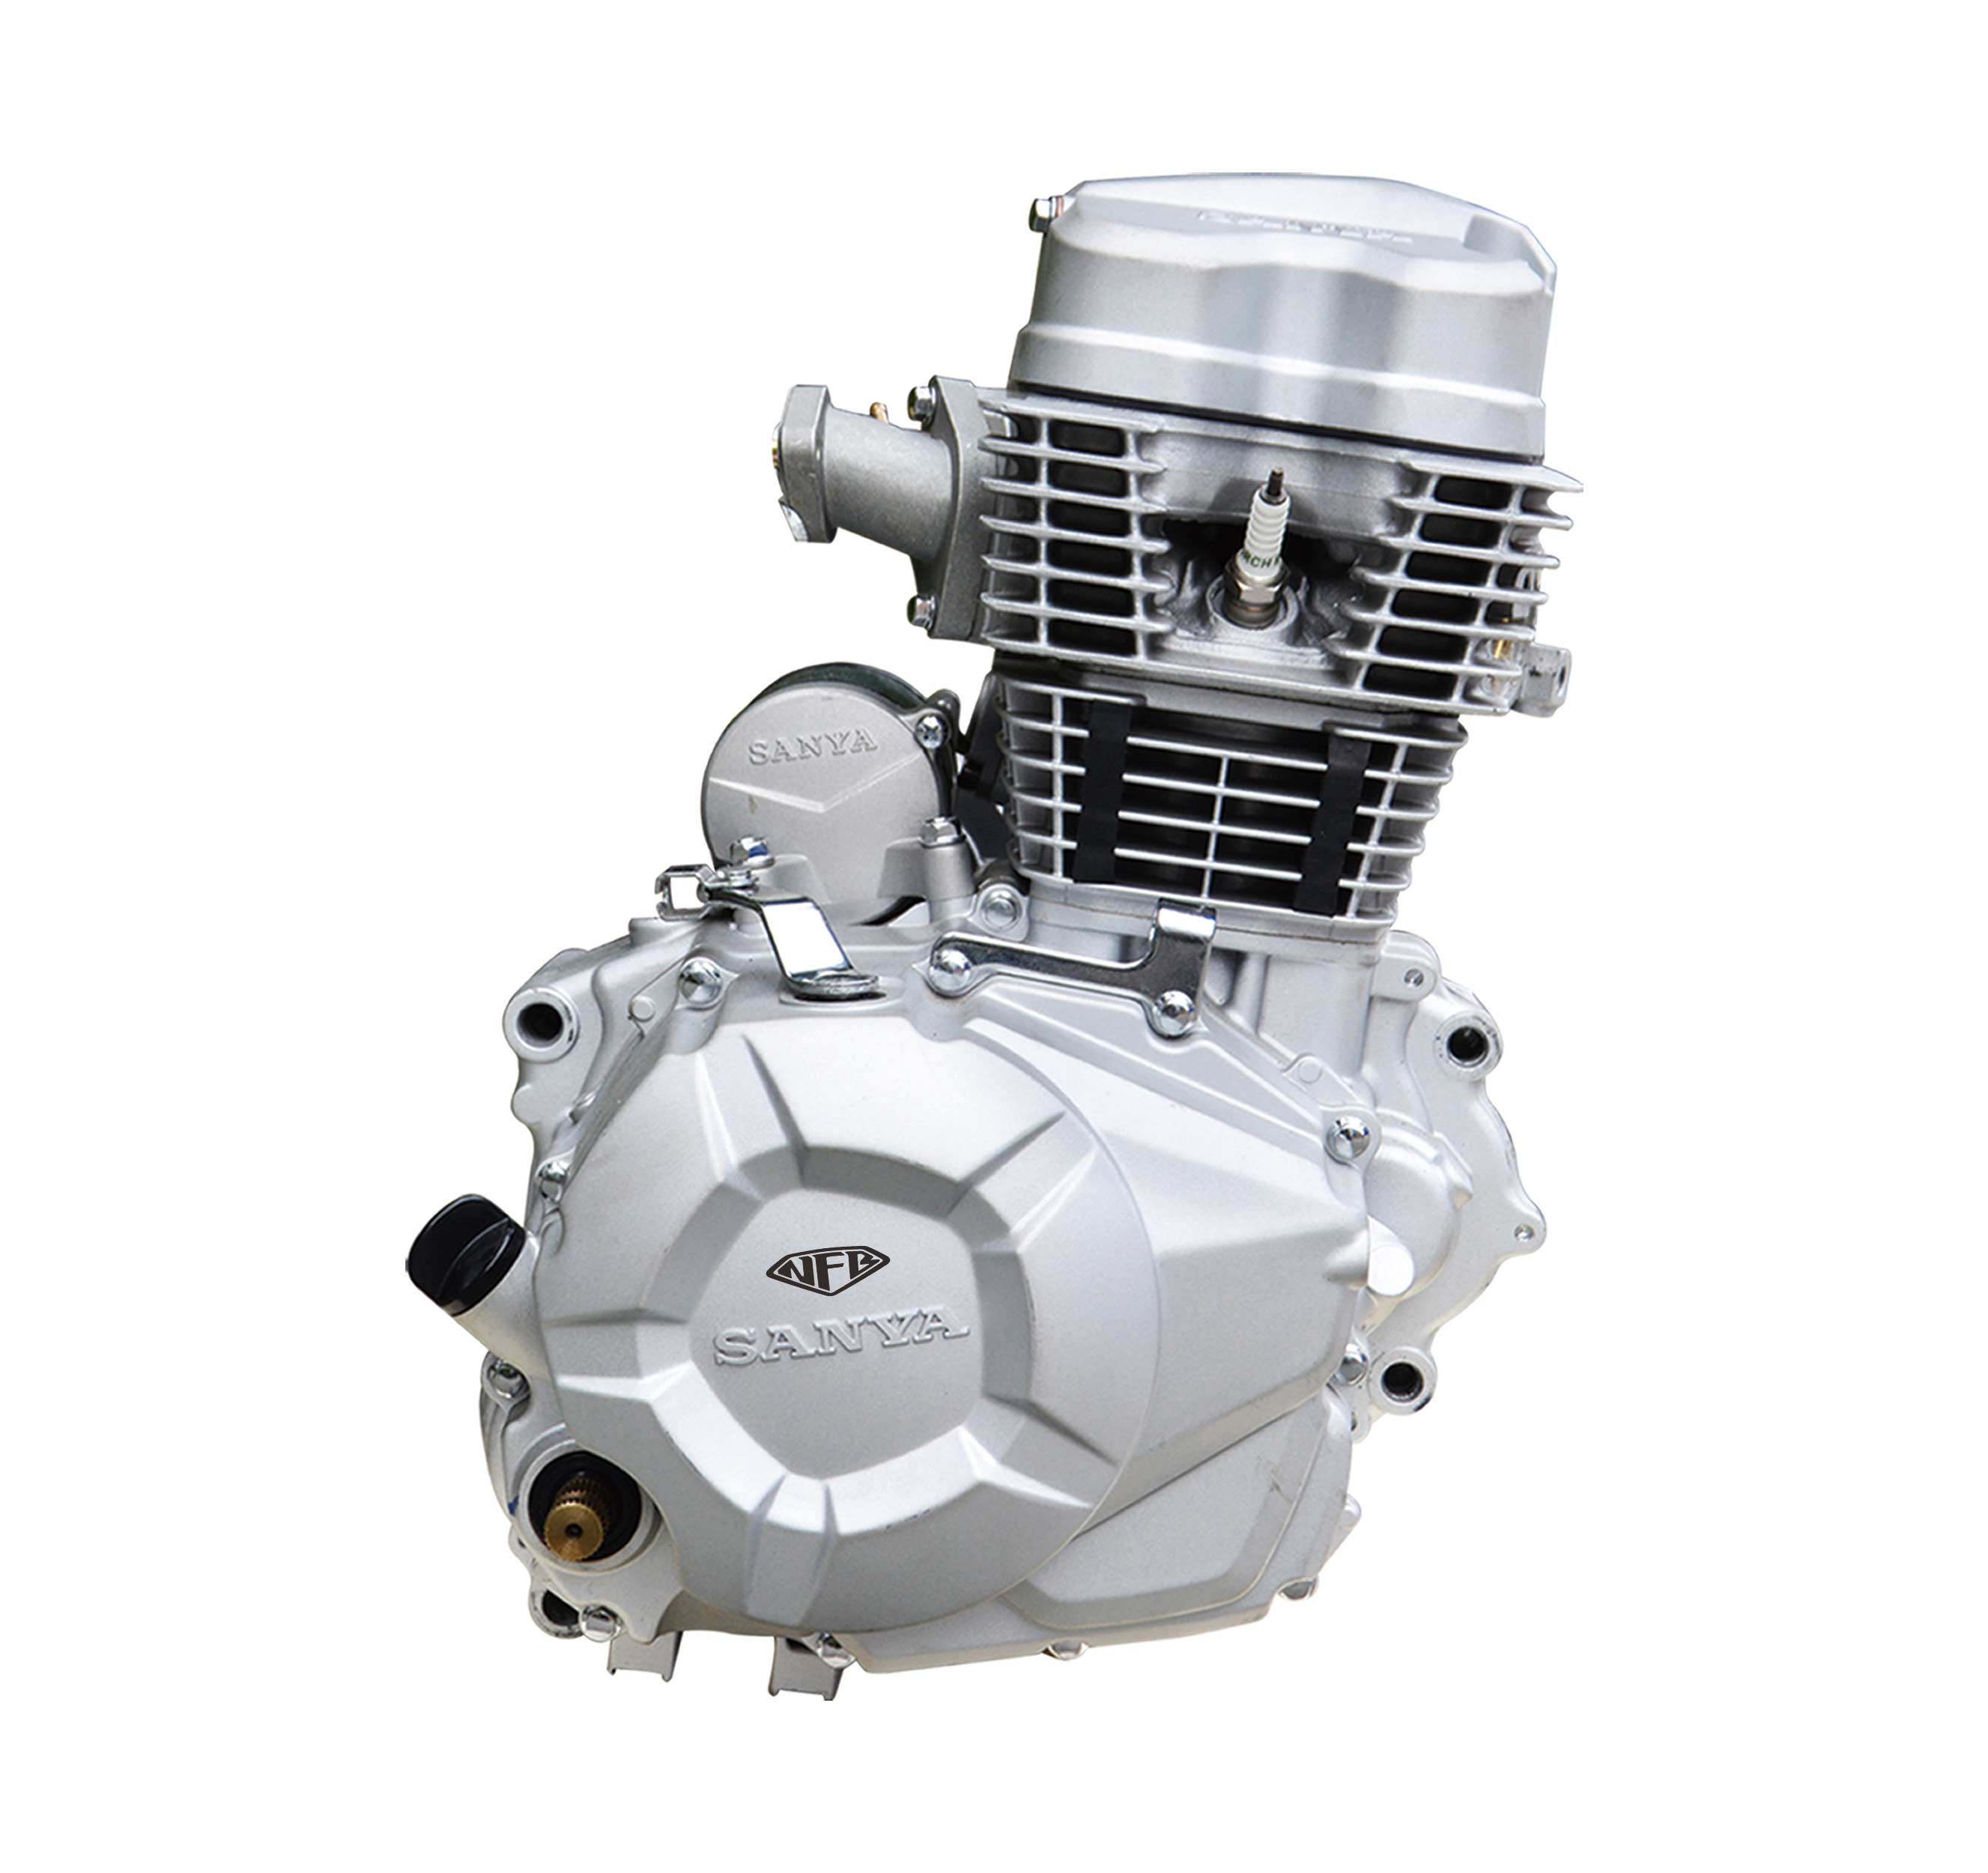 125/150cc NFB Engine for CG/GN model